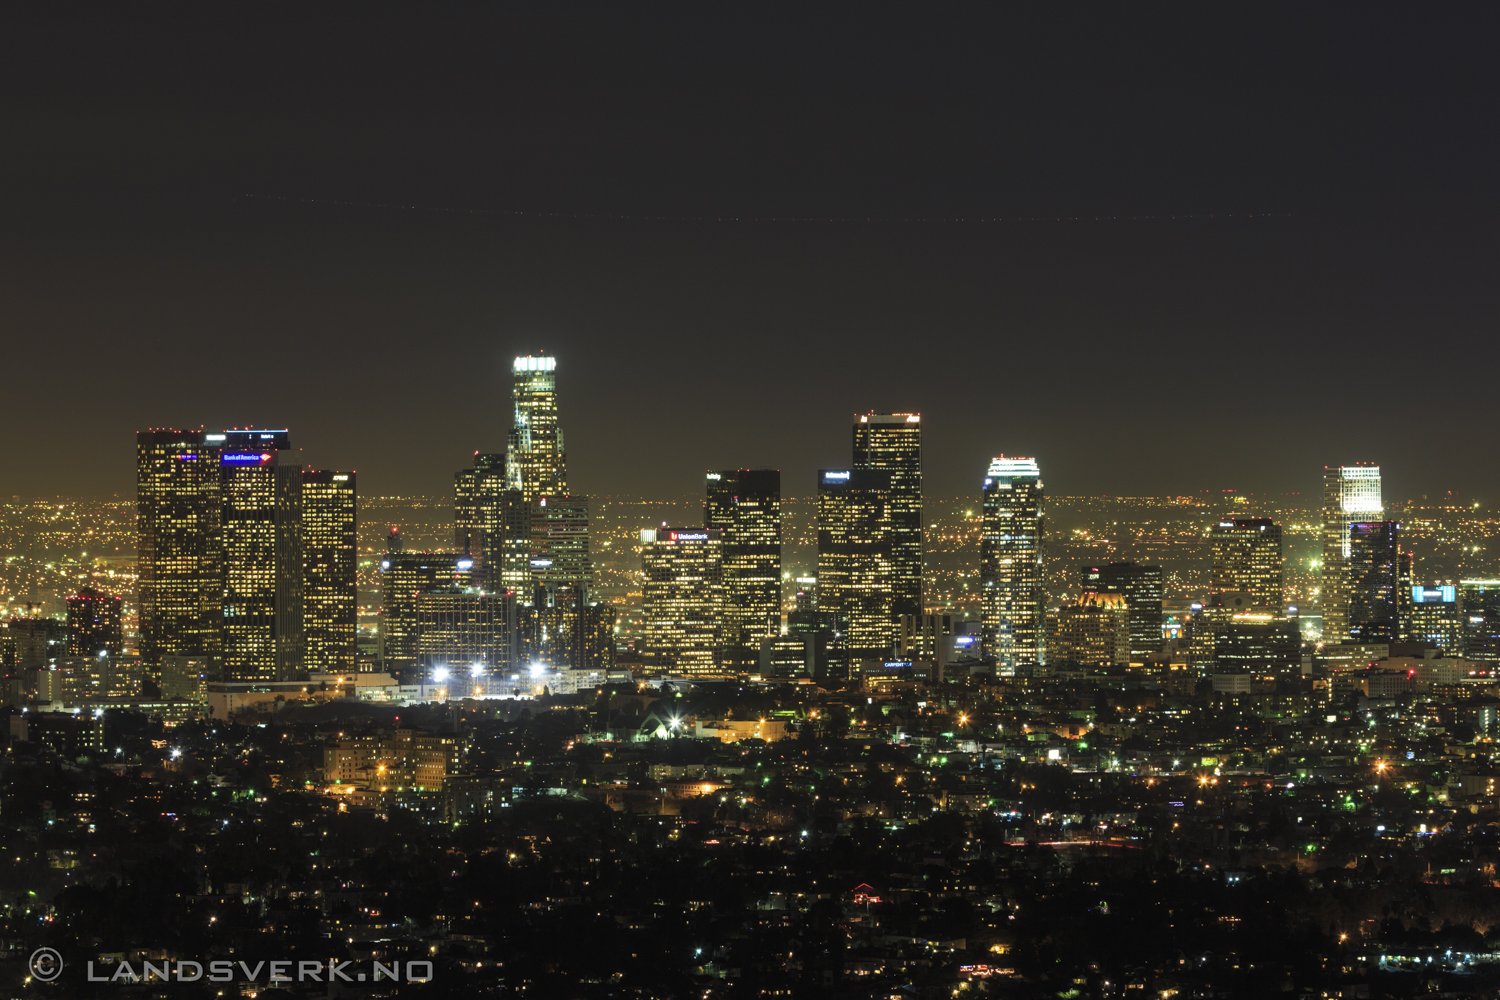 Los Angeles, California.

(Canon EOS 5D Mark III / Canon EF 70-200mm f/2.8 L IS II USM / Canon 2x EF Extender III)